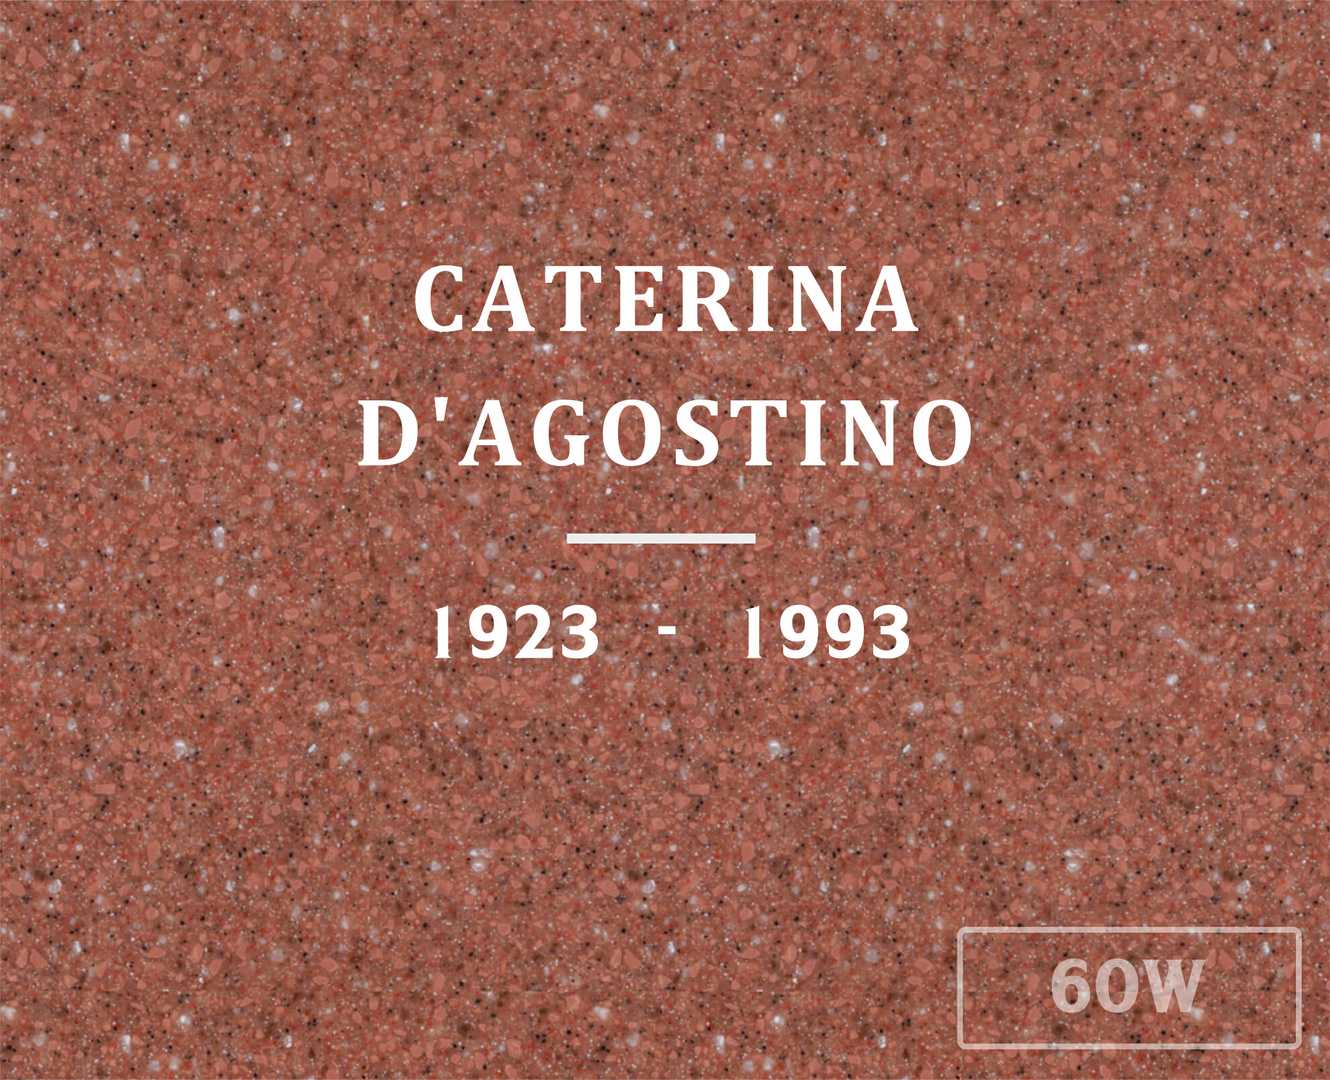 Caterina D'Agostino's grave